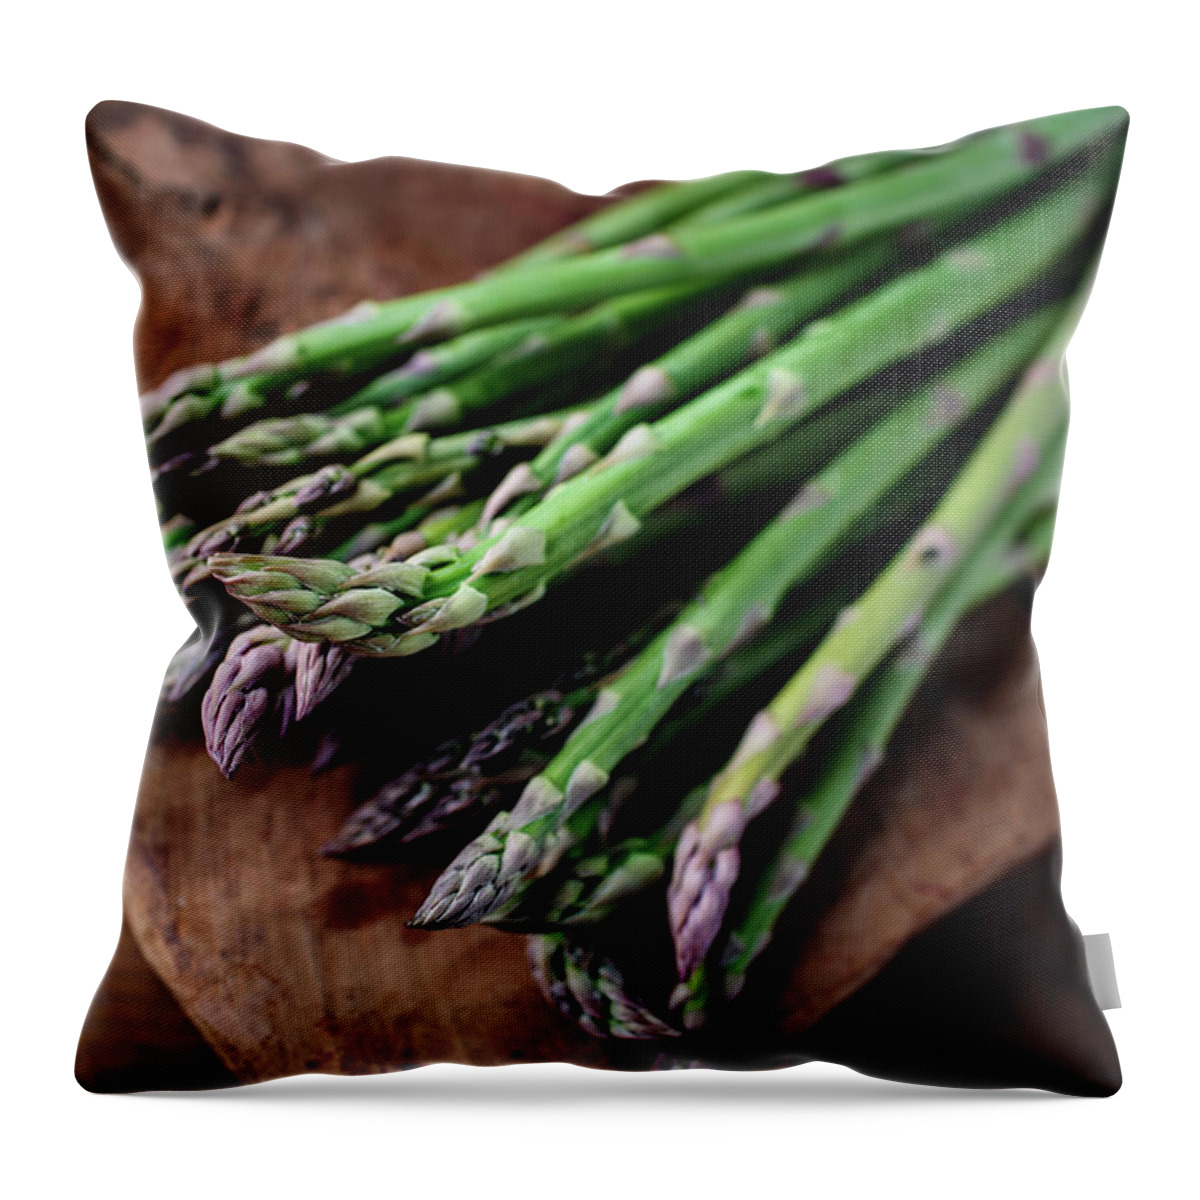 Asparagus Throw Pillow featuring the photograph Fresh Green Asparagus by Nailia Schwarz